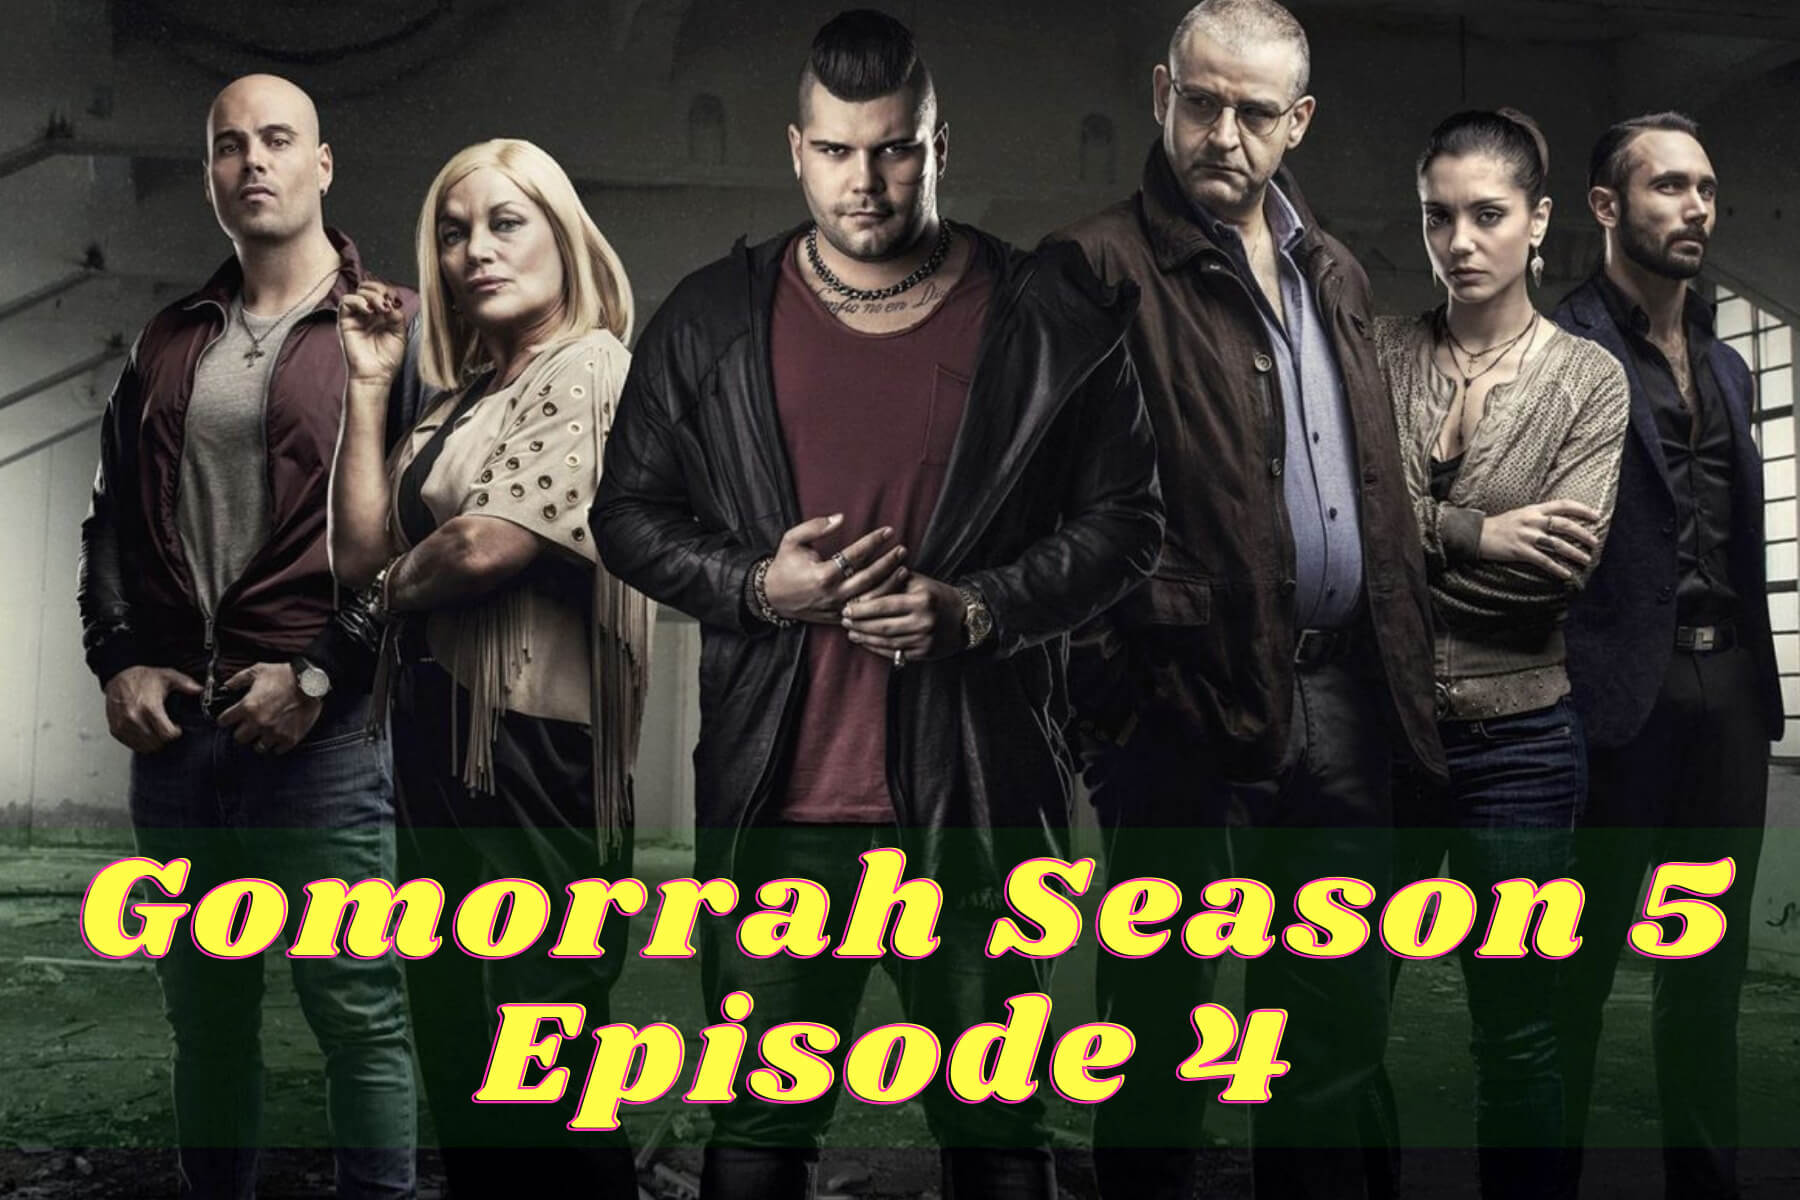 Gomorrah Season 5 Episode 4